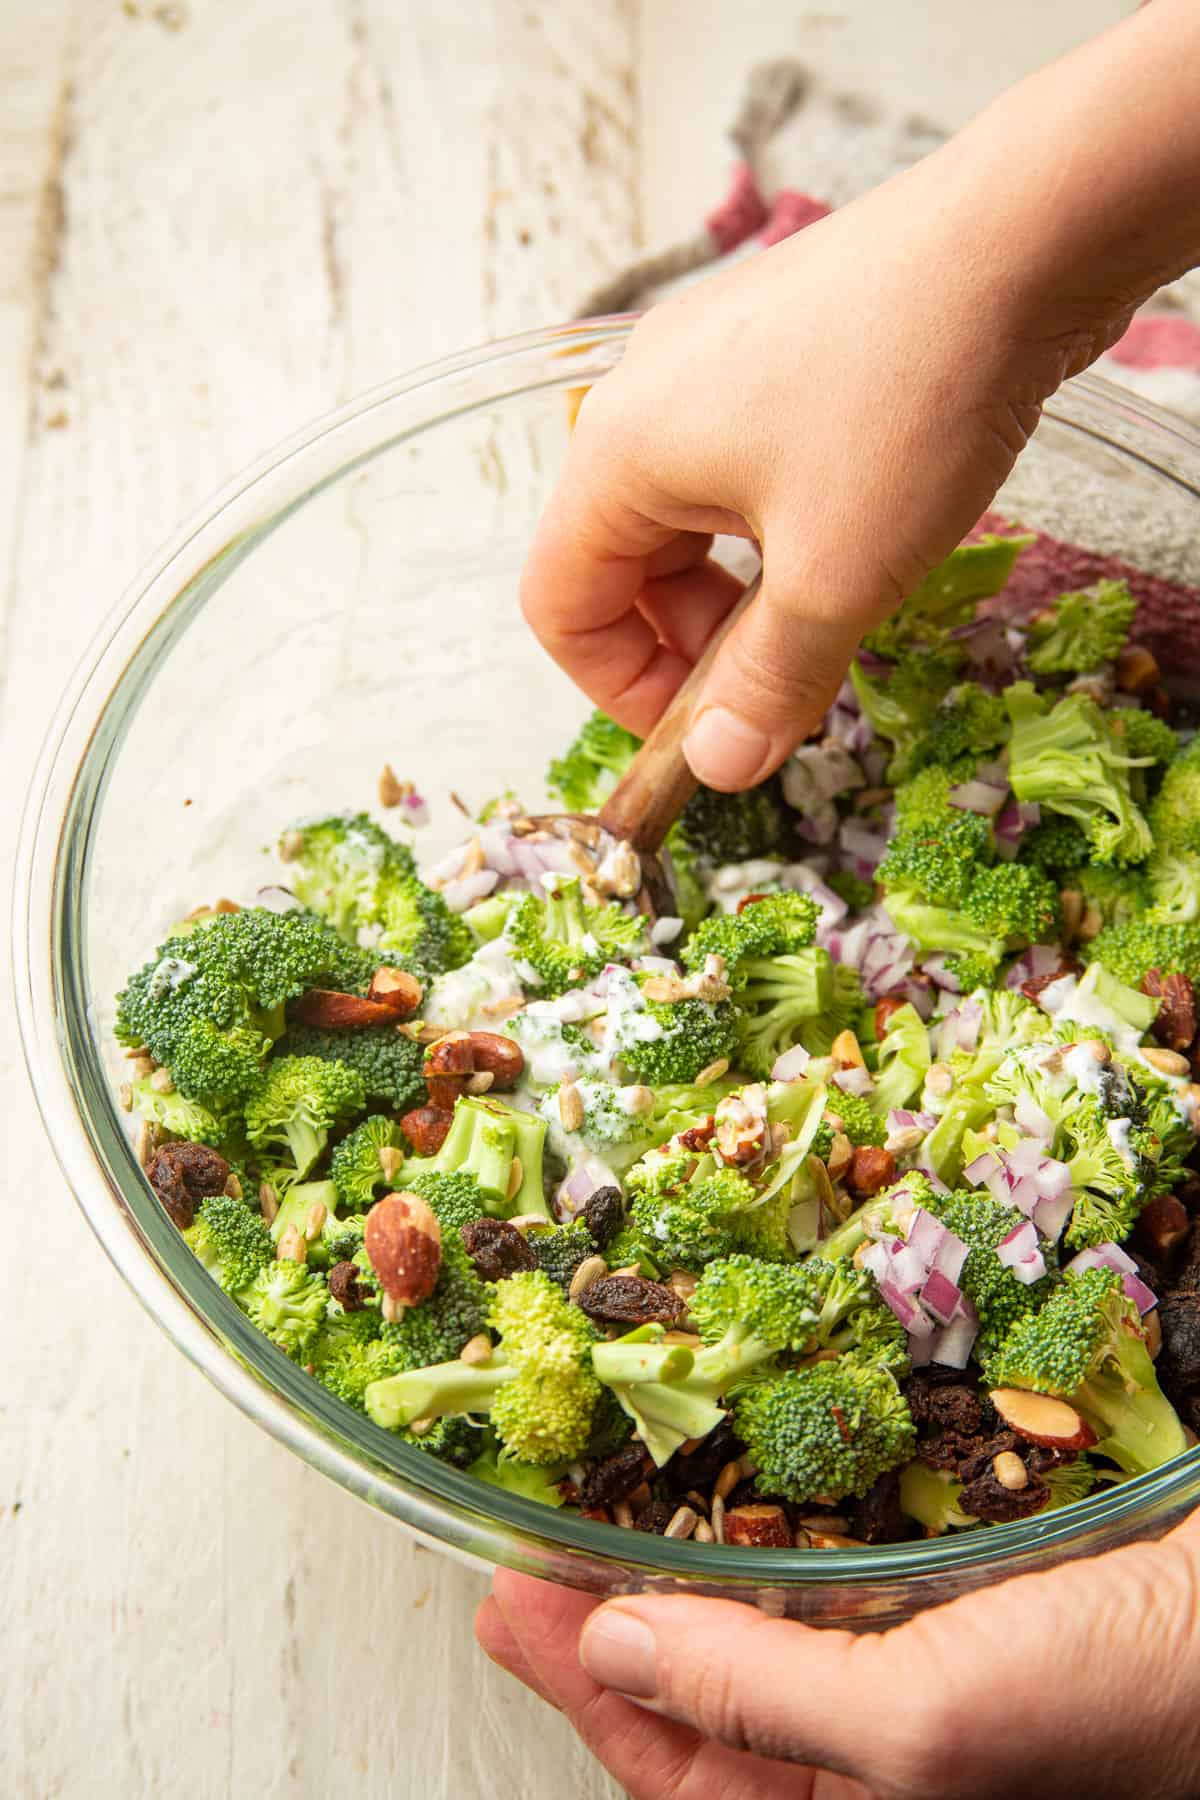 Hand stirring Vegan Broccoli Salad together in a glass bowl.